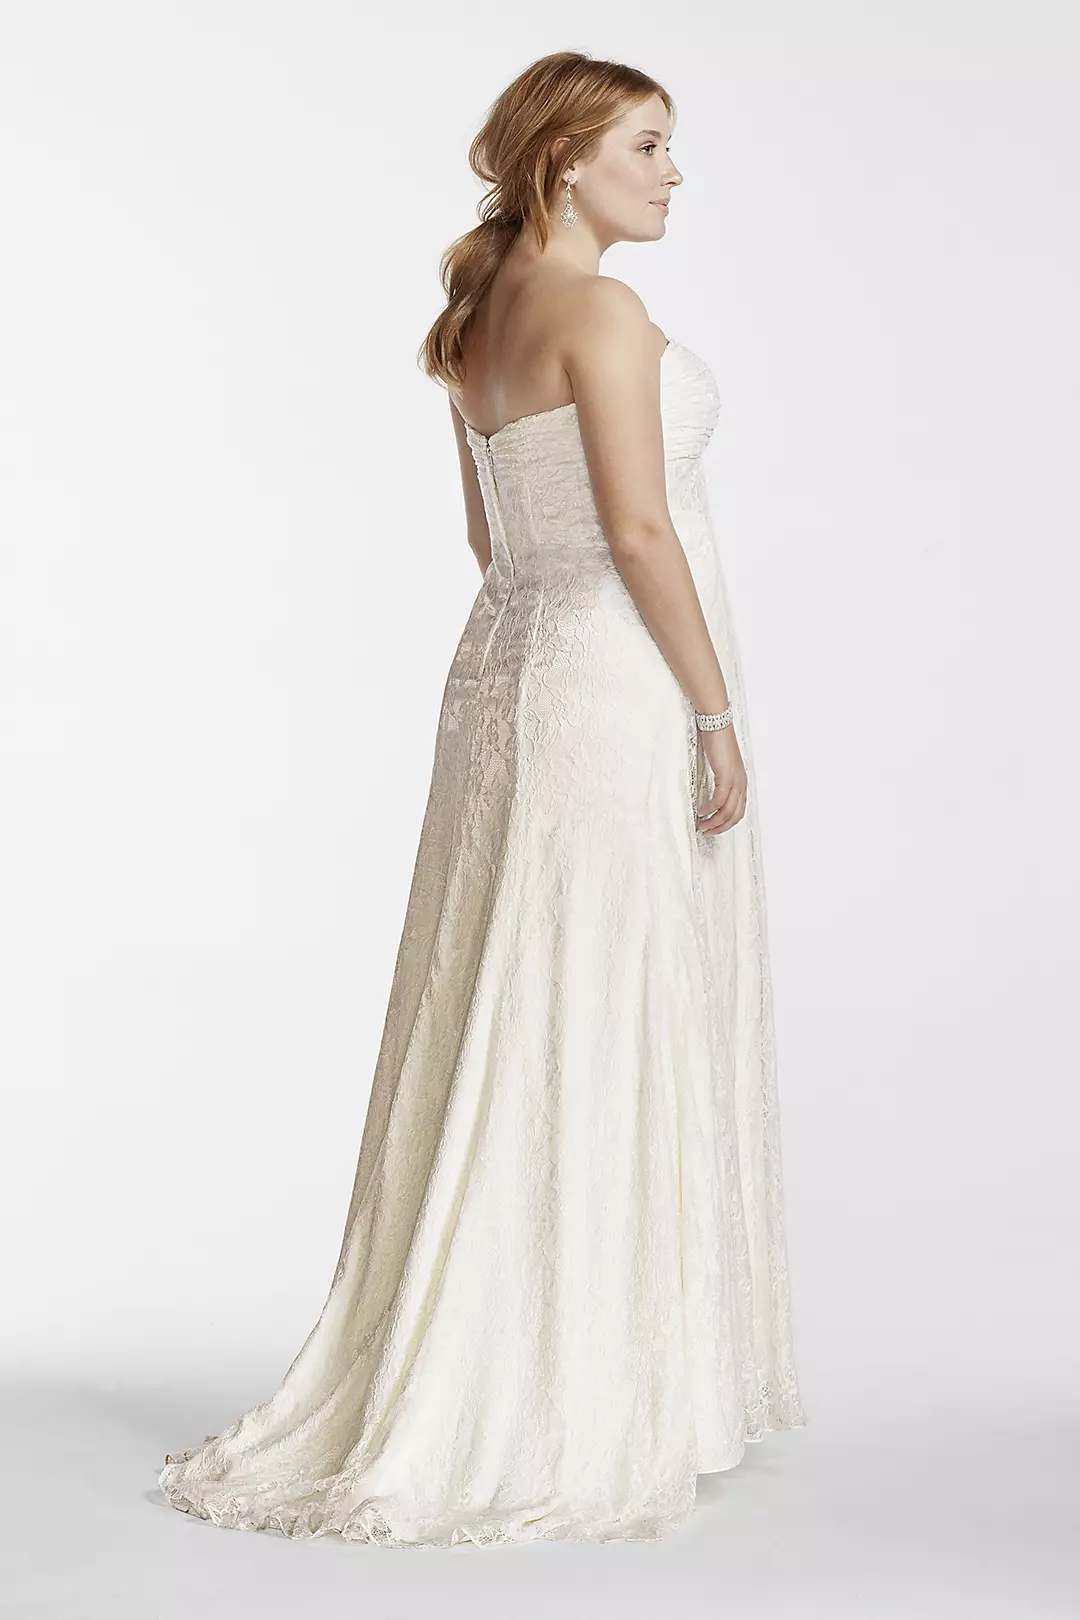 Strapless A-Line Wedding Dress with Empire Waist Image 2